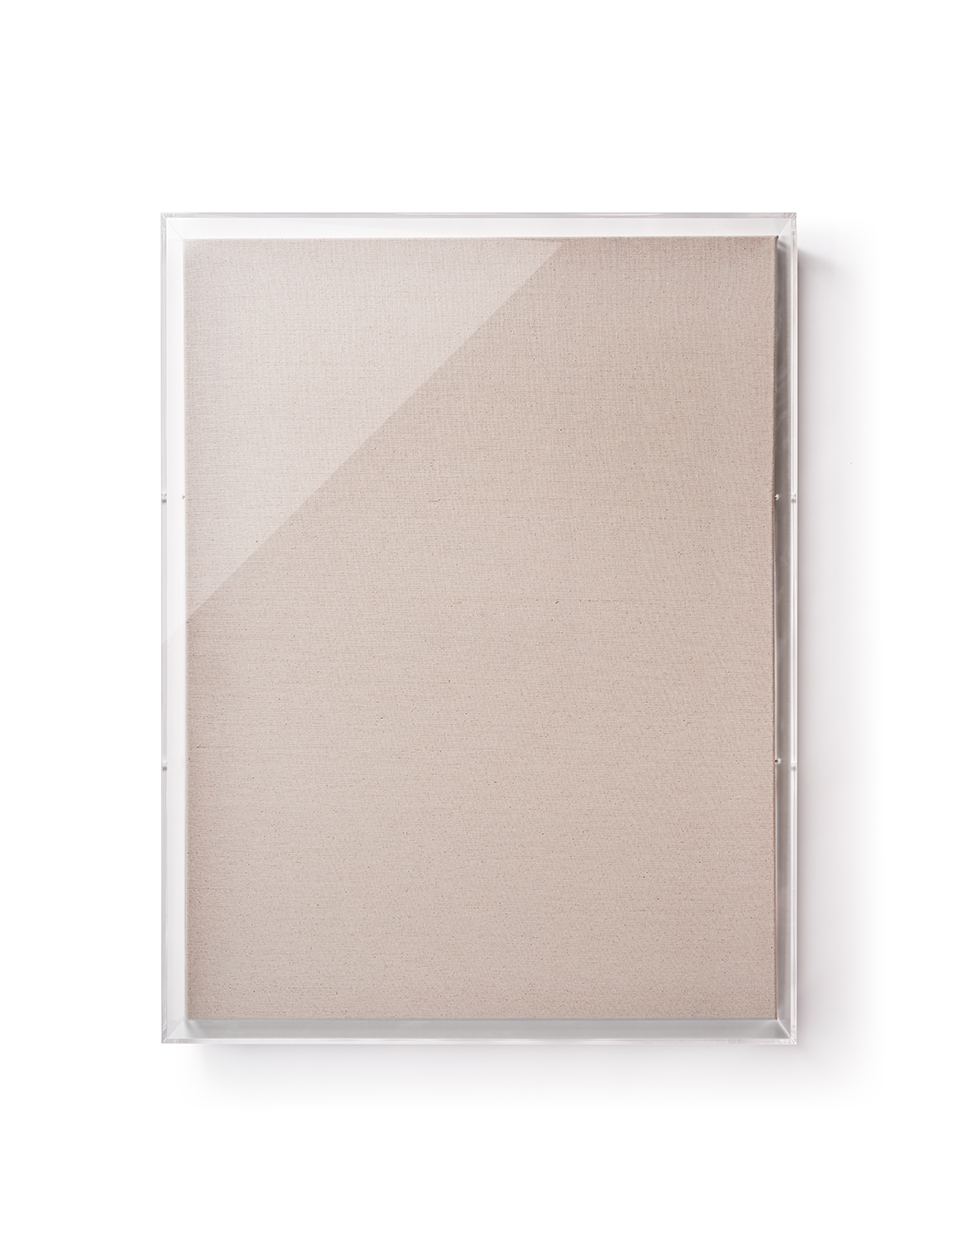 16" x 20" x 3" Modern Acrylic Shadowbox with Linen Canvas - UV Grade